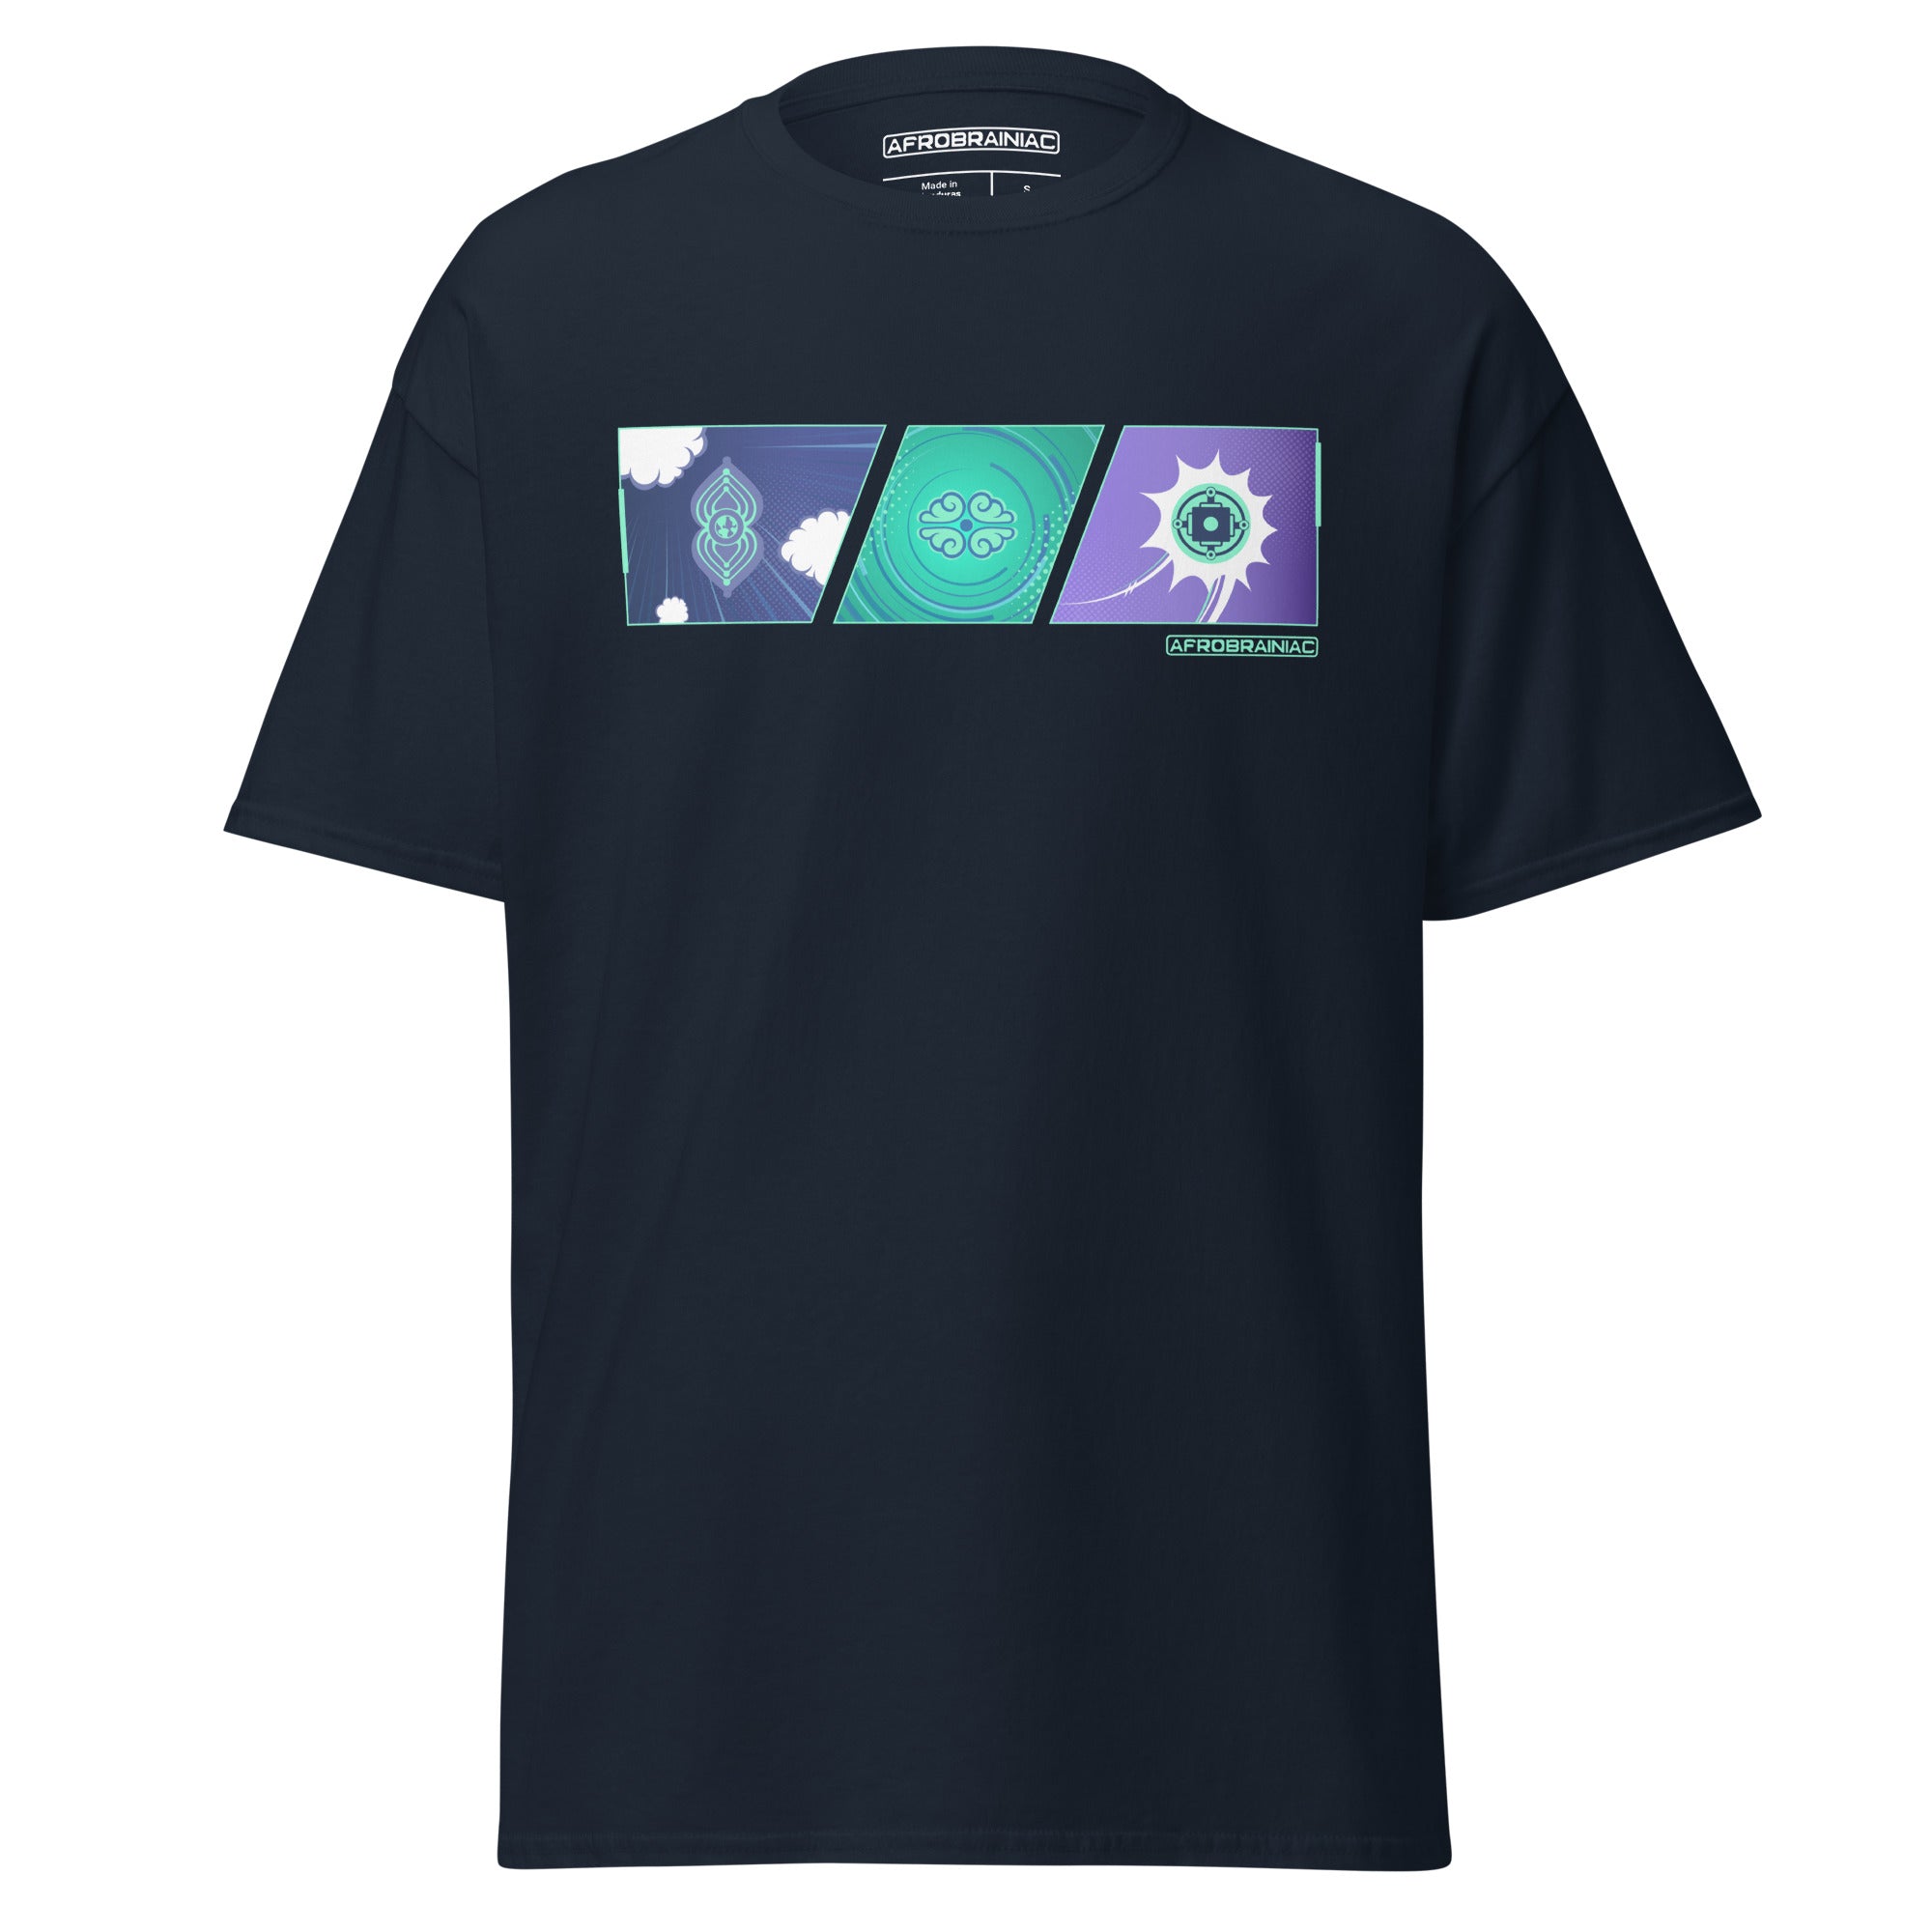 AB "Global Vision" Unisex Adult T-Shirt